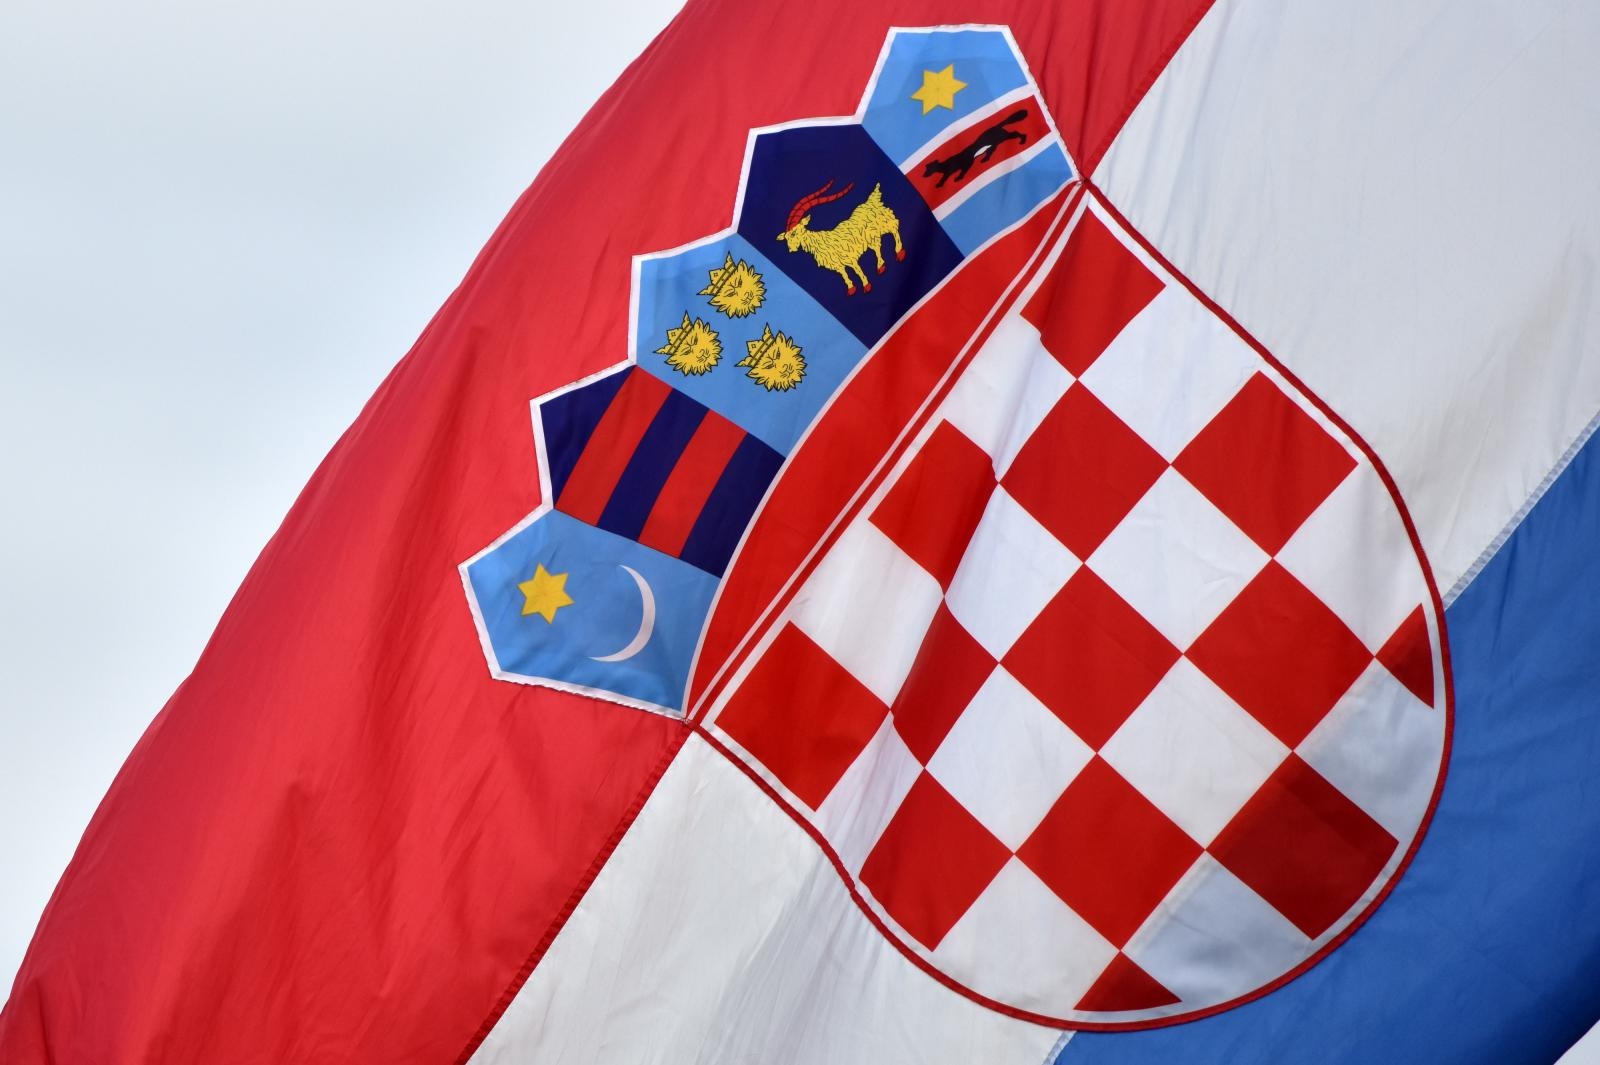 20.03.2018., Sibenik - Hrvatska zastava. 
Photo: Hrvoje Jelavic/PIXSELL